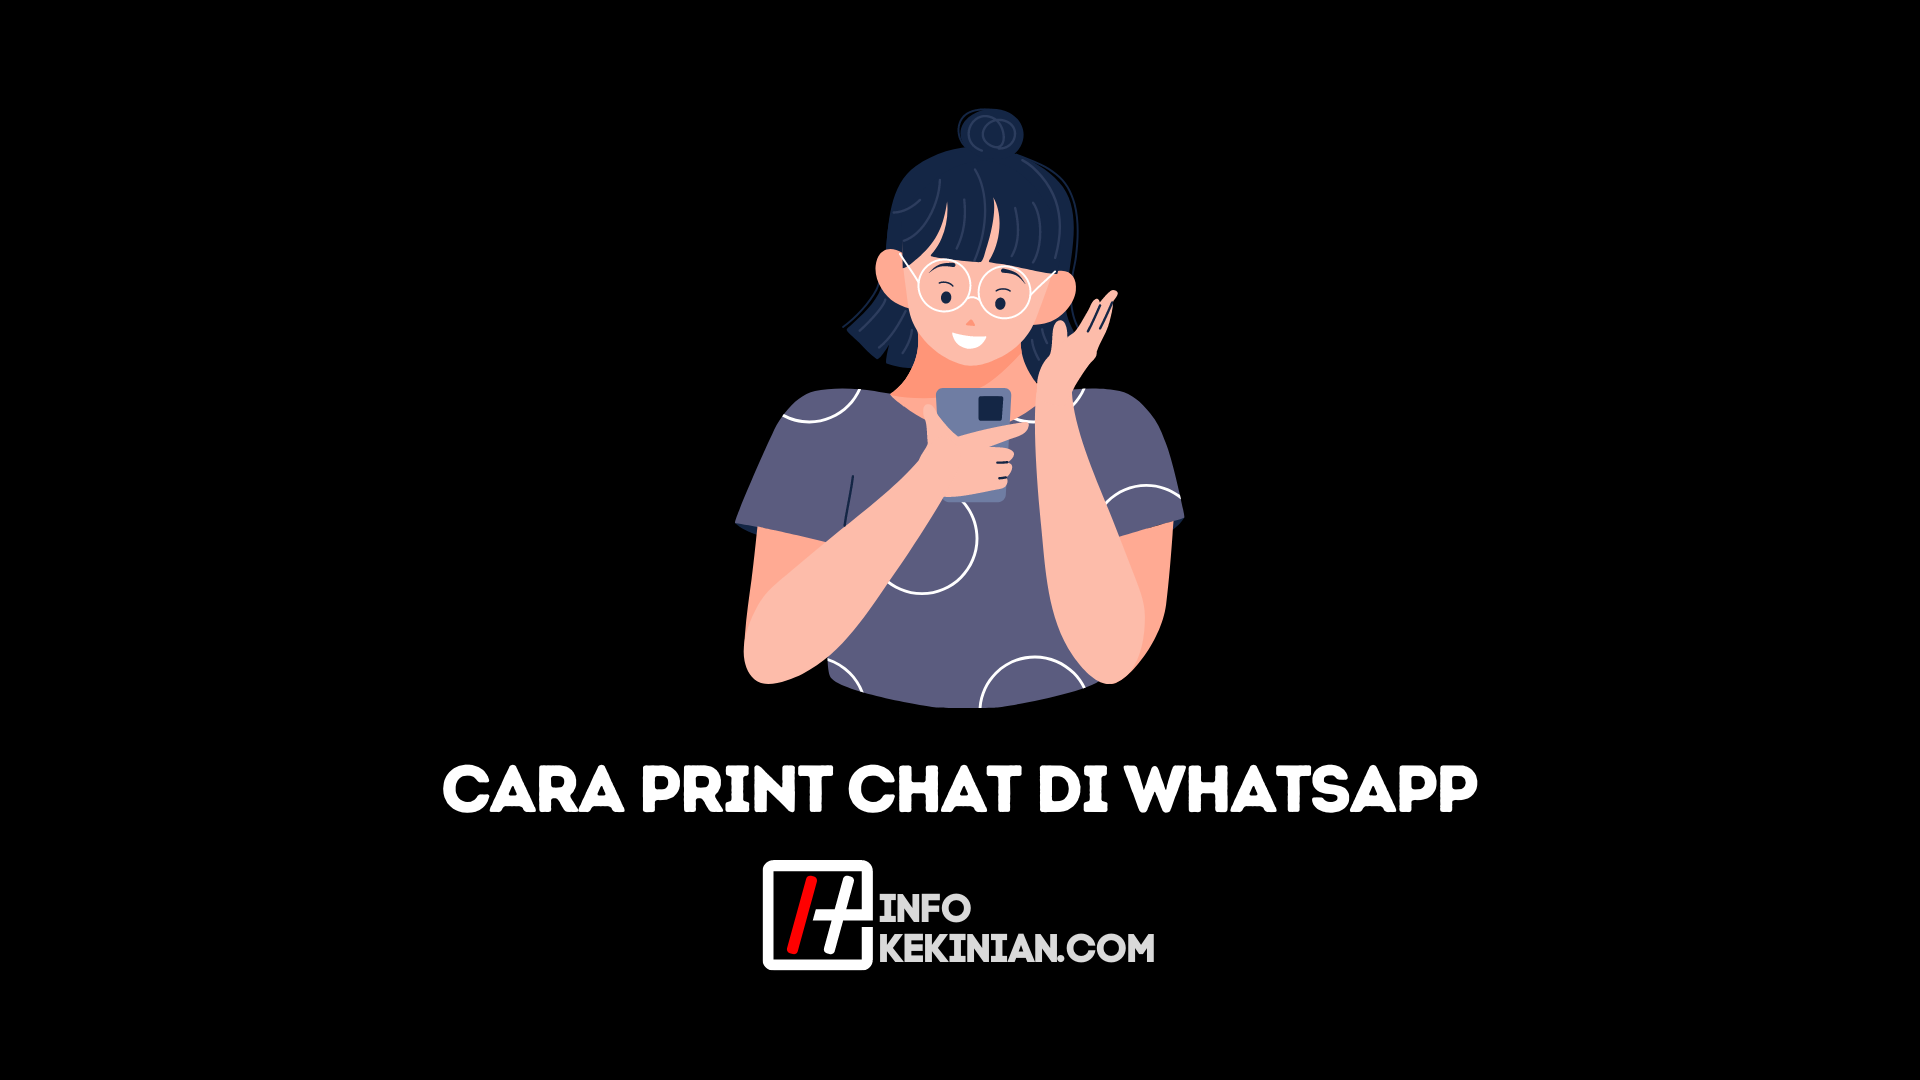 Lista de cómo imprimir chats de WhatsApp